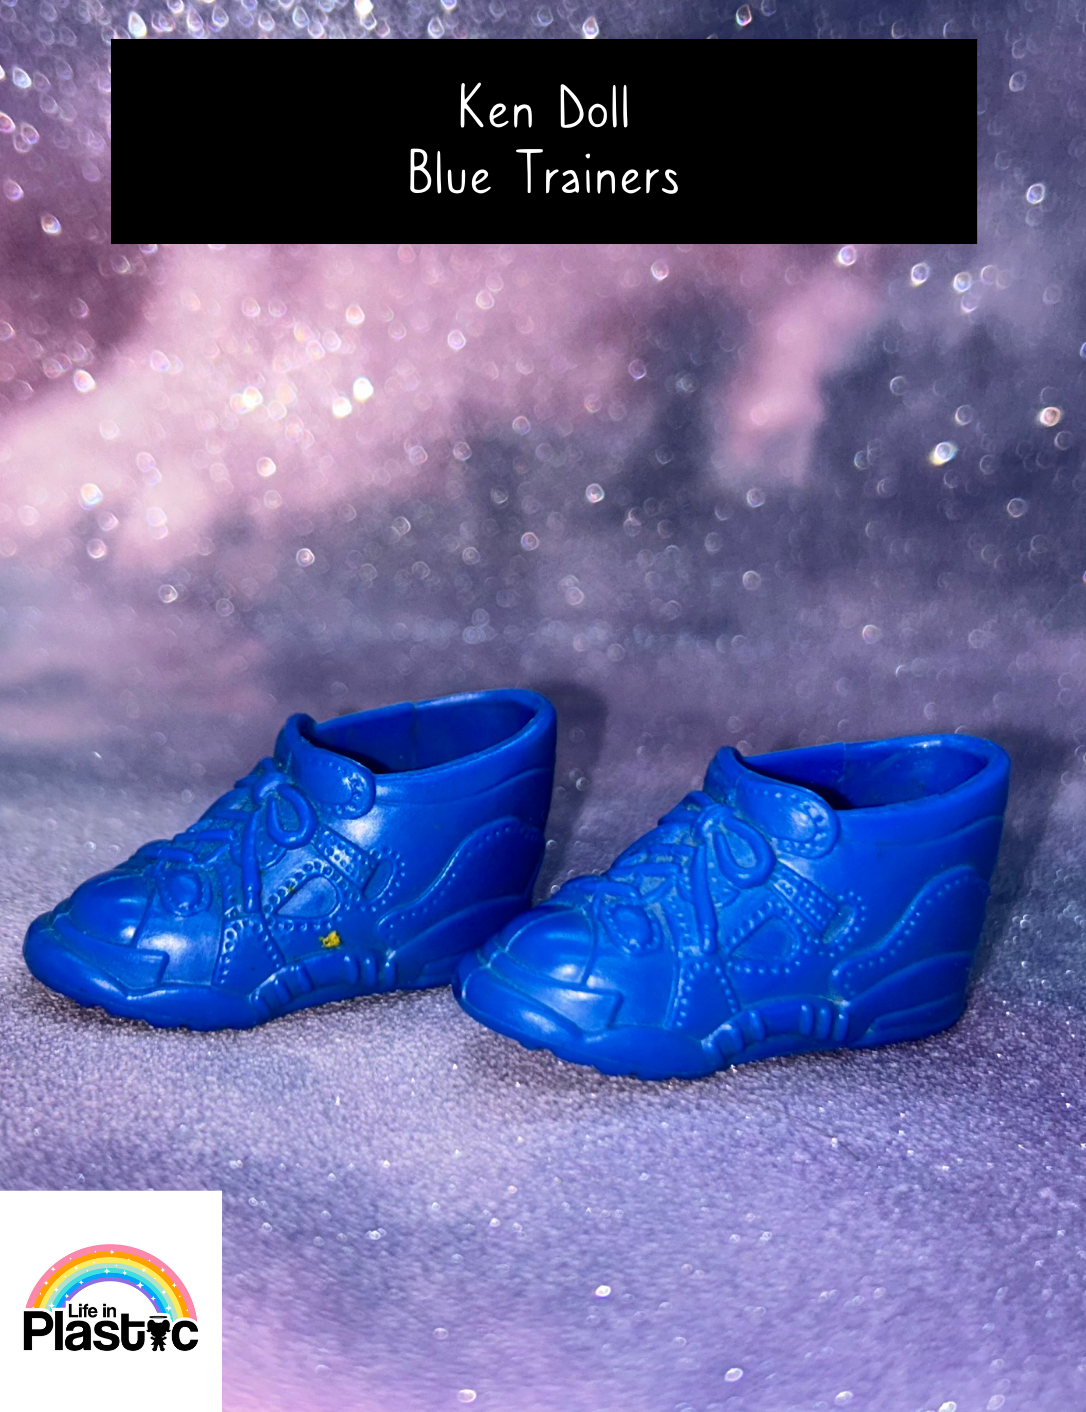 Ken Doll Blue Trainers